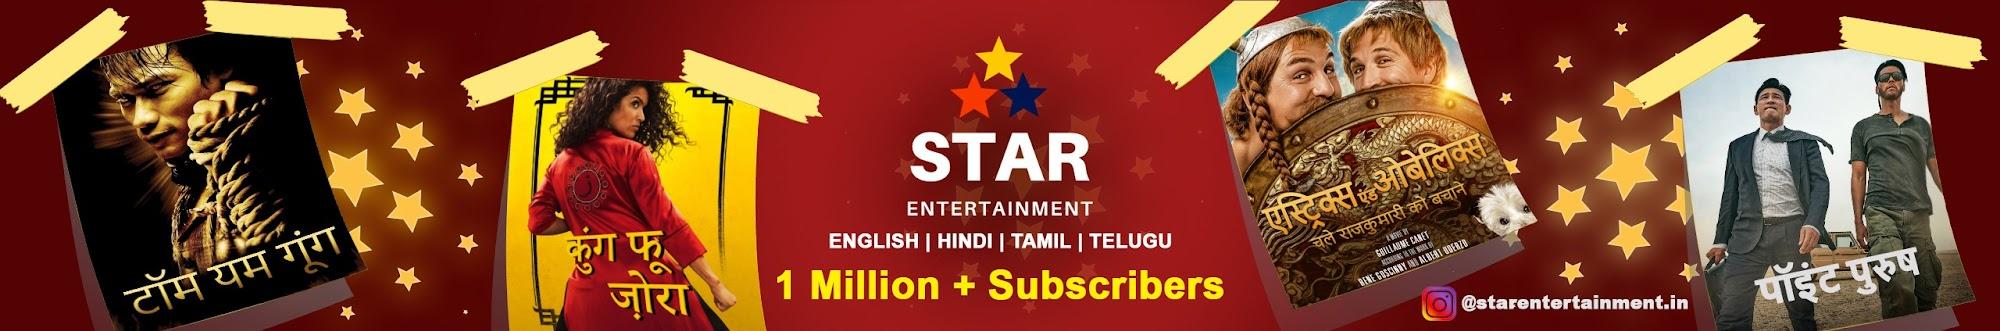 Star Entertainment Hindi